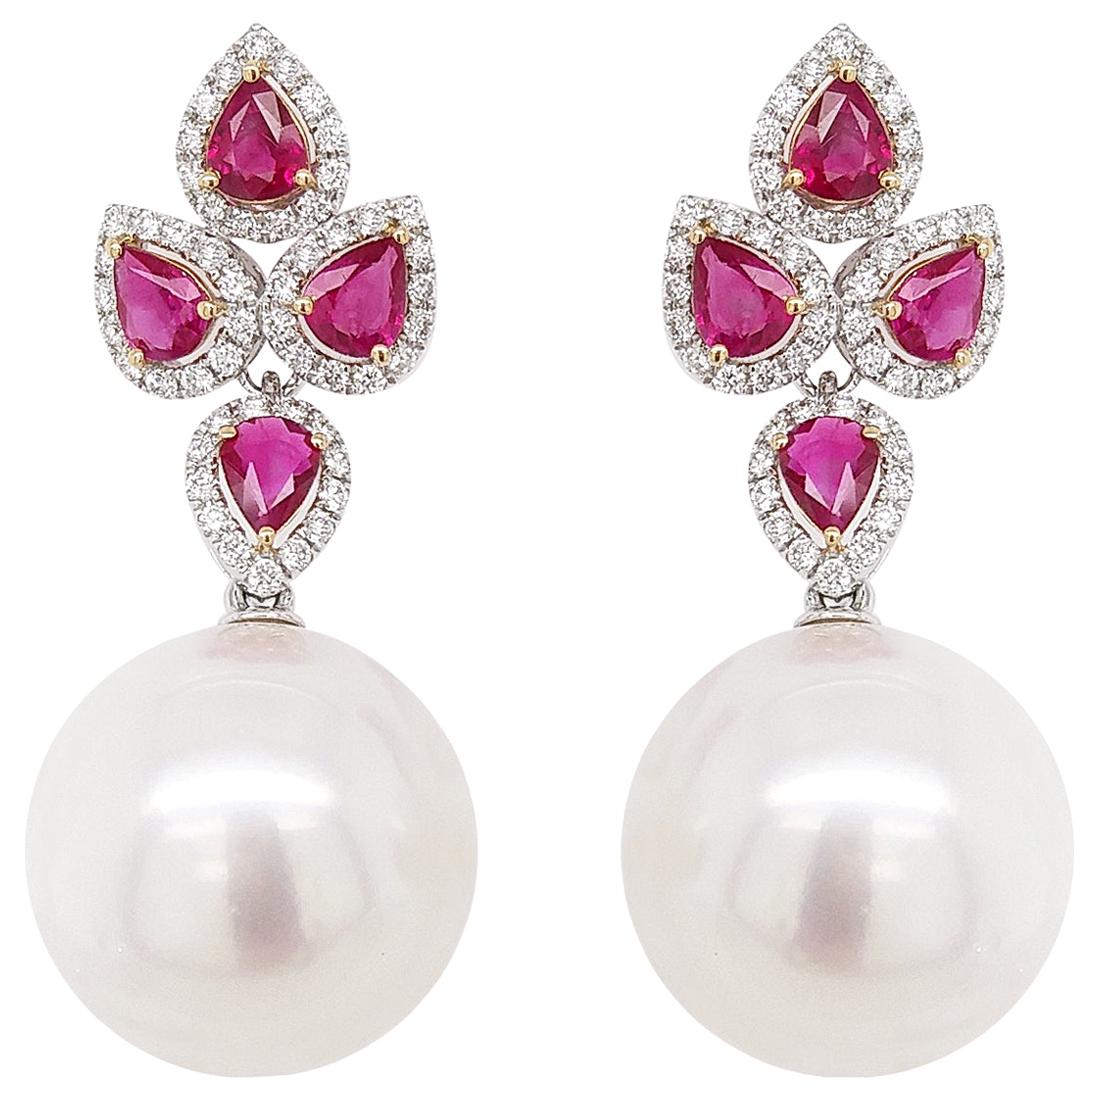 White Pearl Ruby White Diamond 18K Gold Drop Earrings